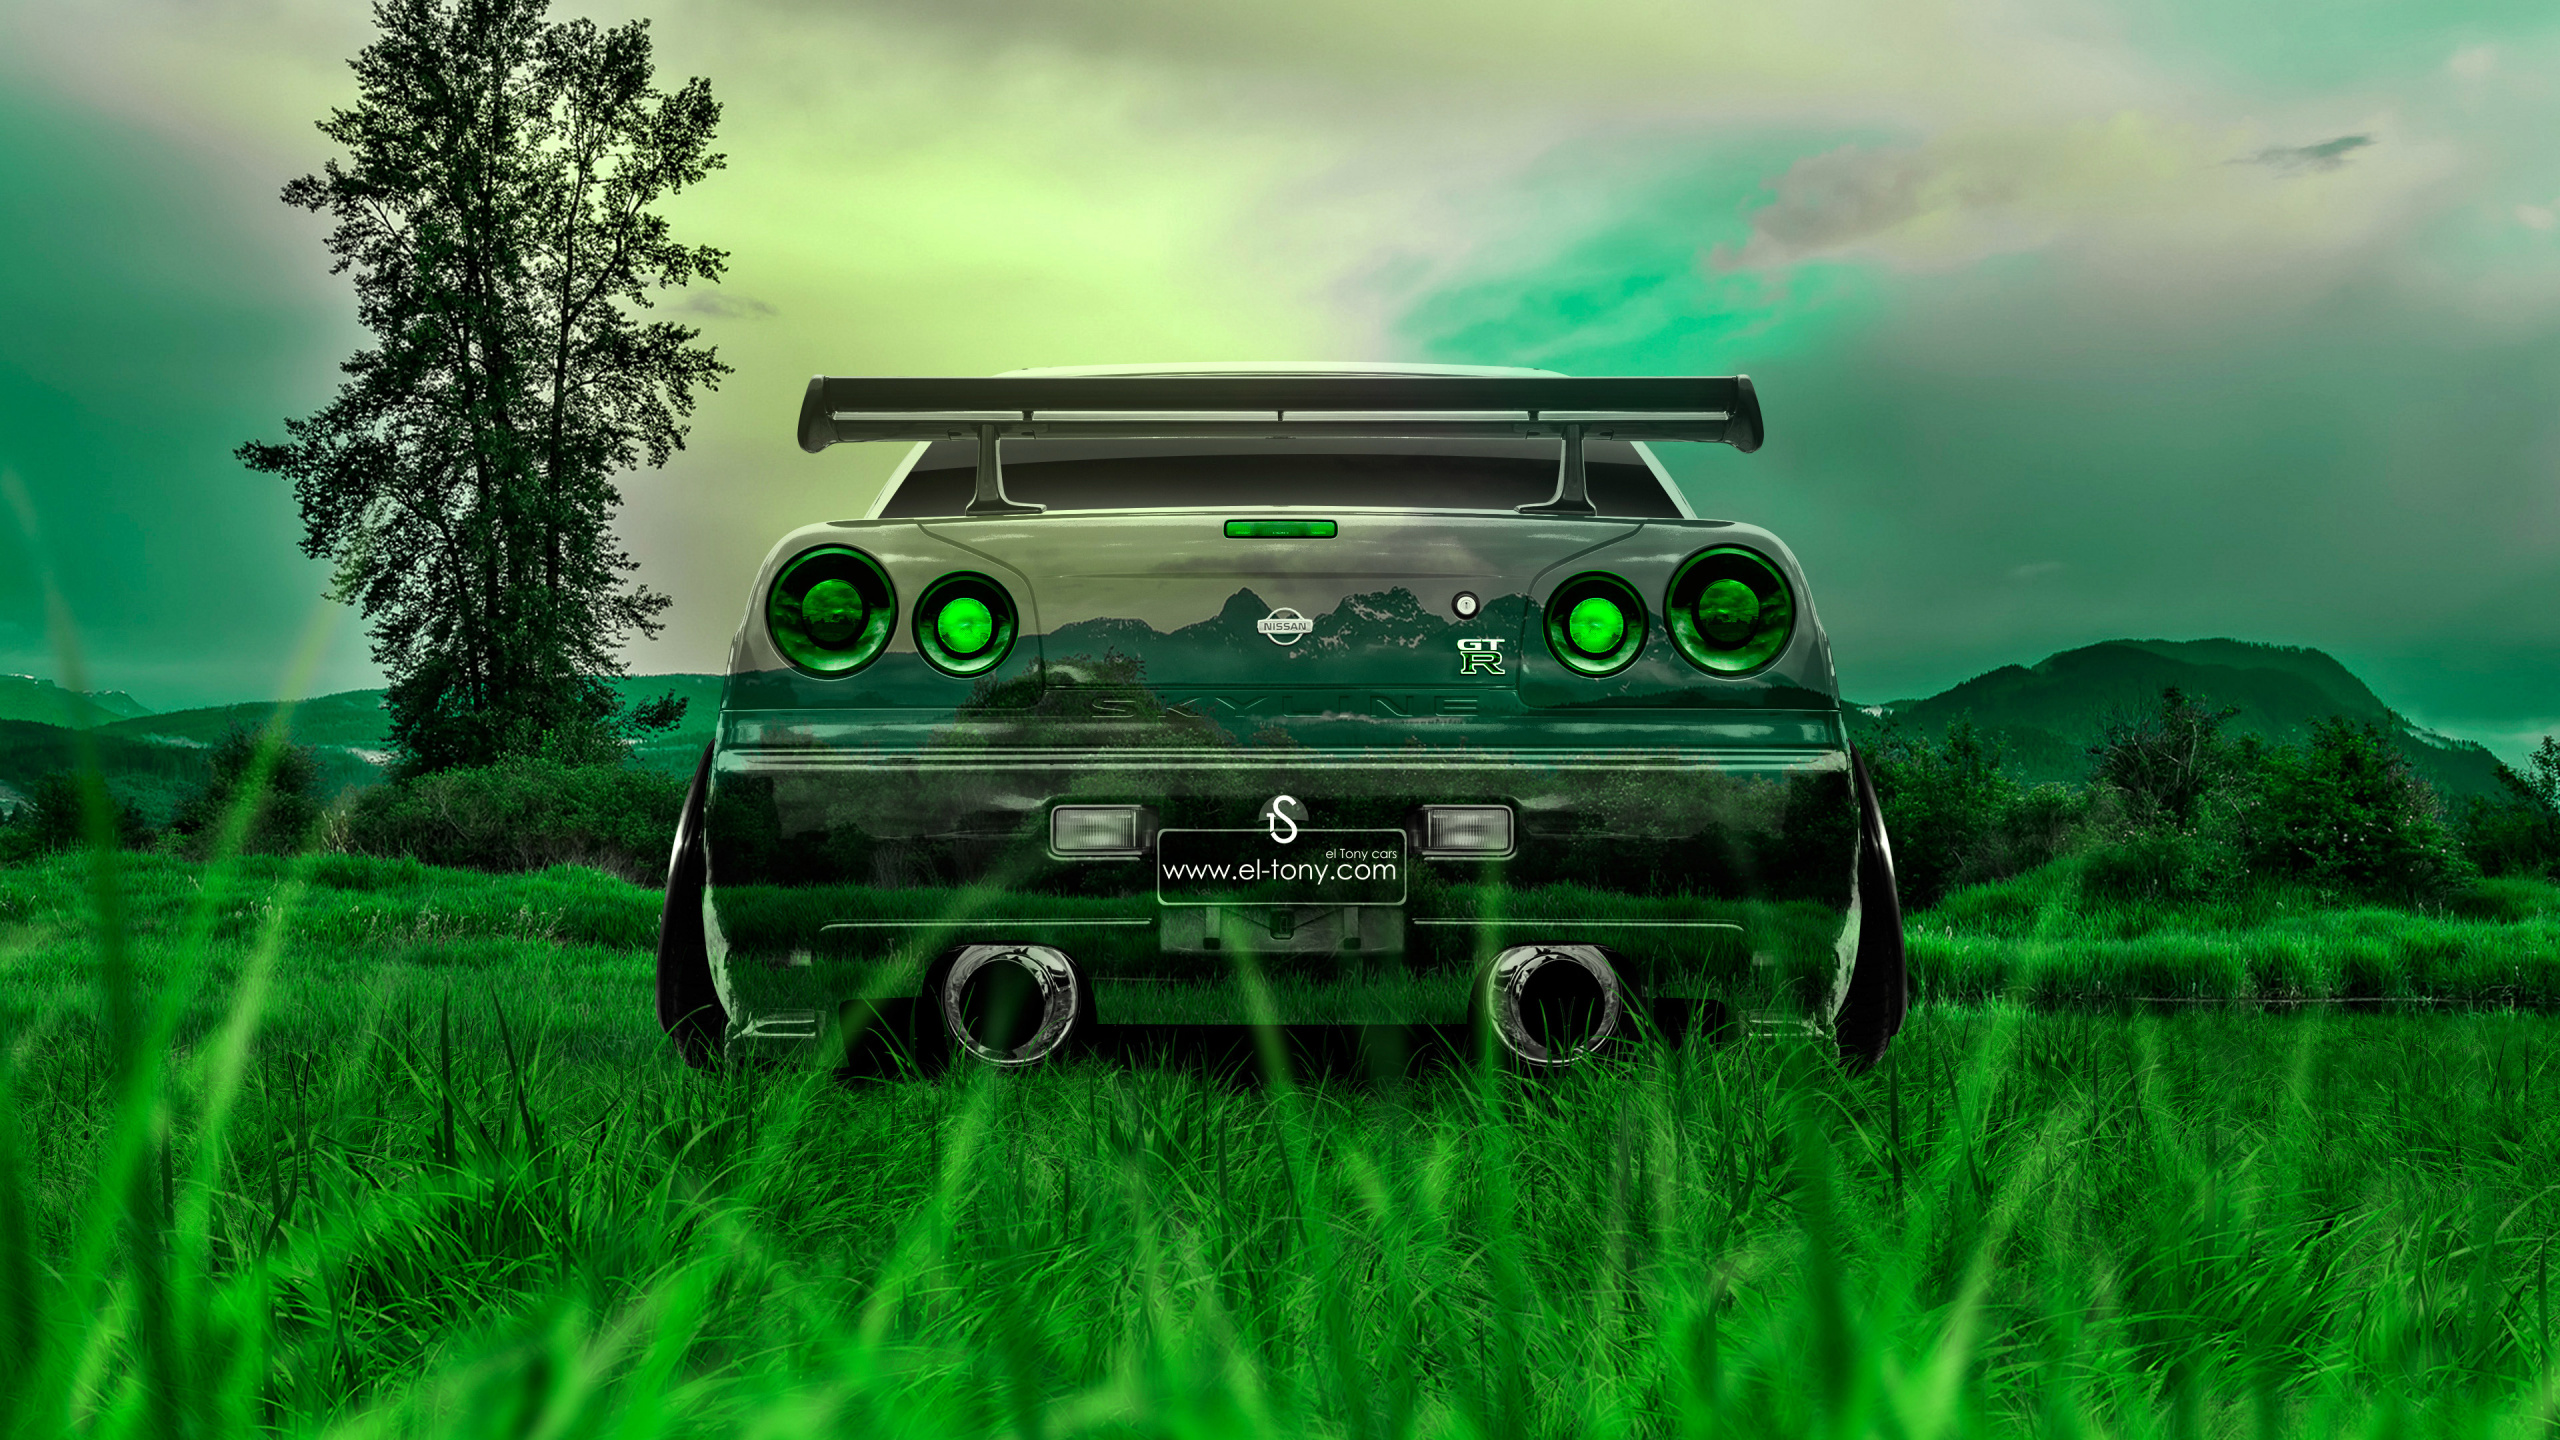 Green Chevrolet Camaro on Green Grass Field During Daytime. Wallpaper in 2560x1440 Resolution